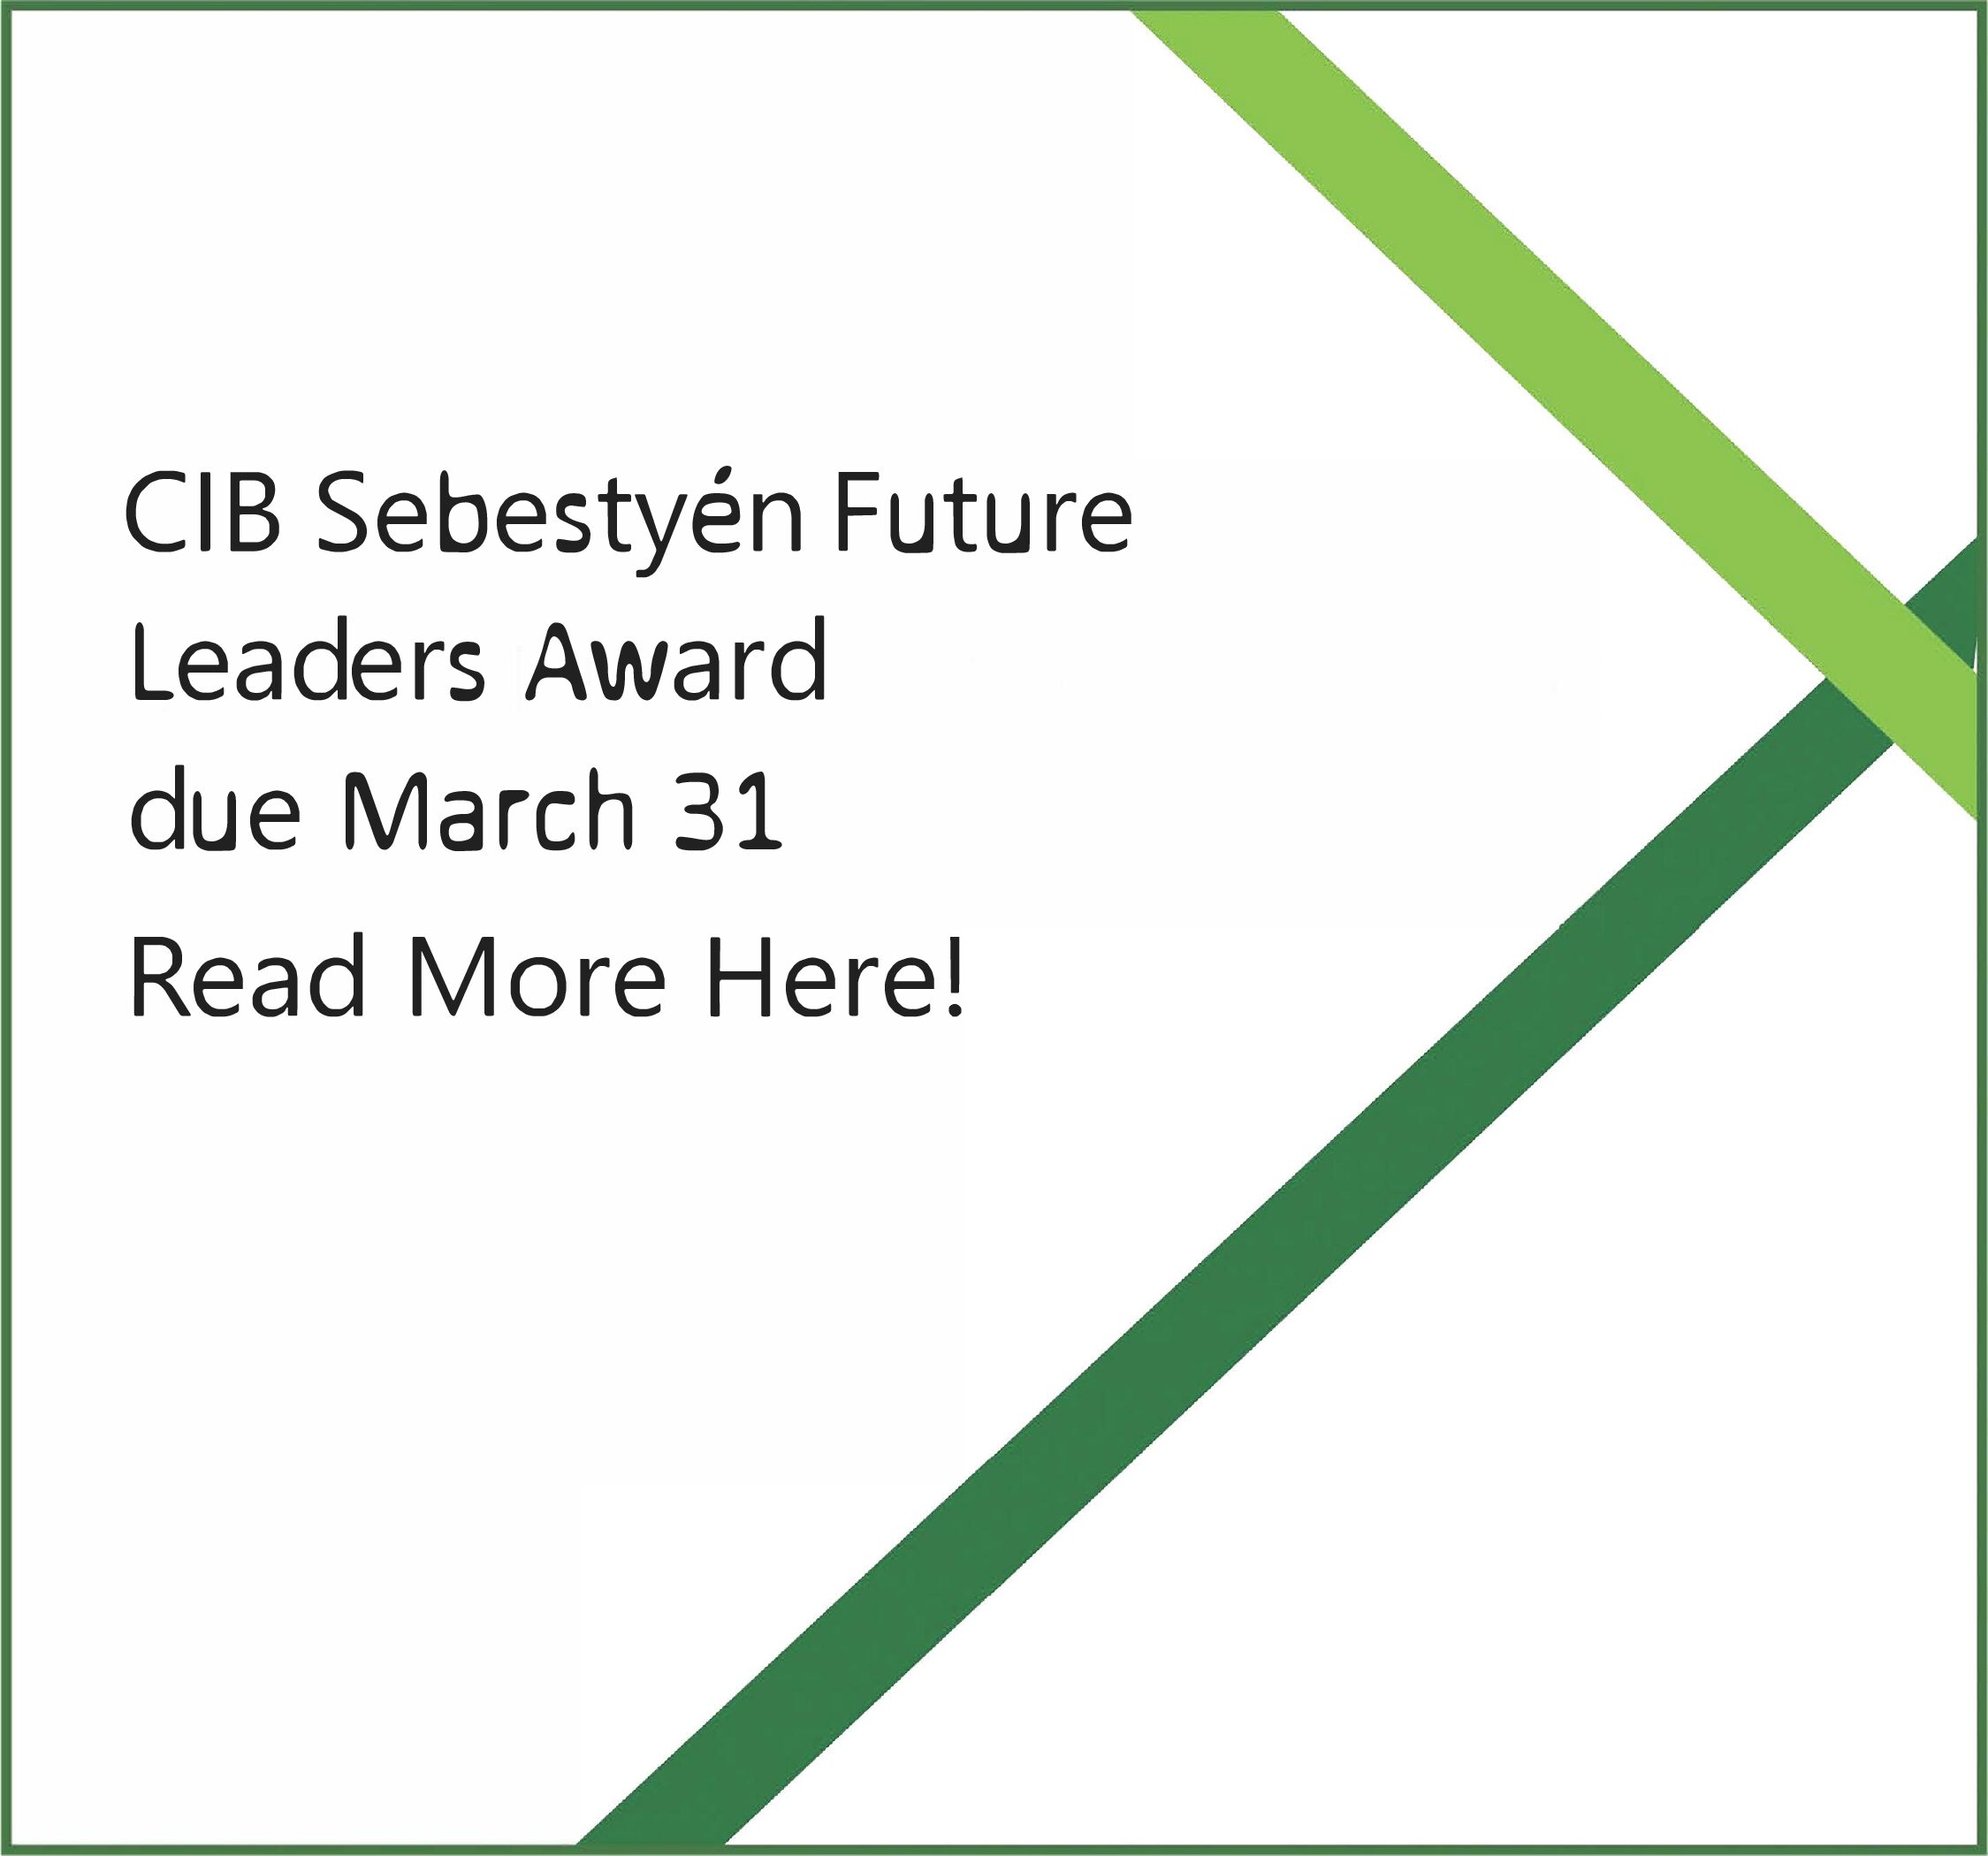 CIB Sebestyén Future Leaders Award 2021